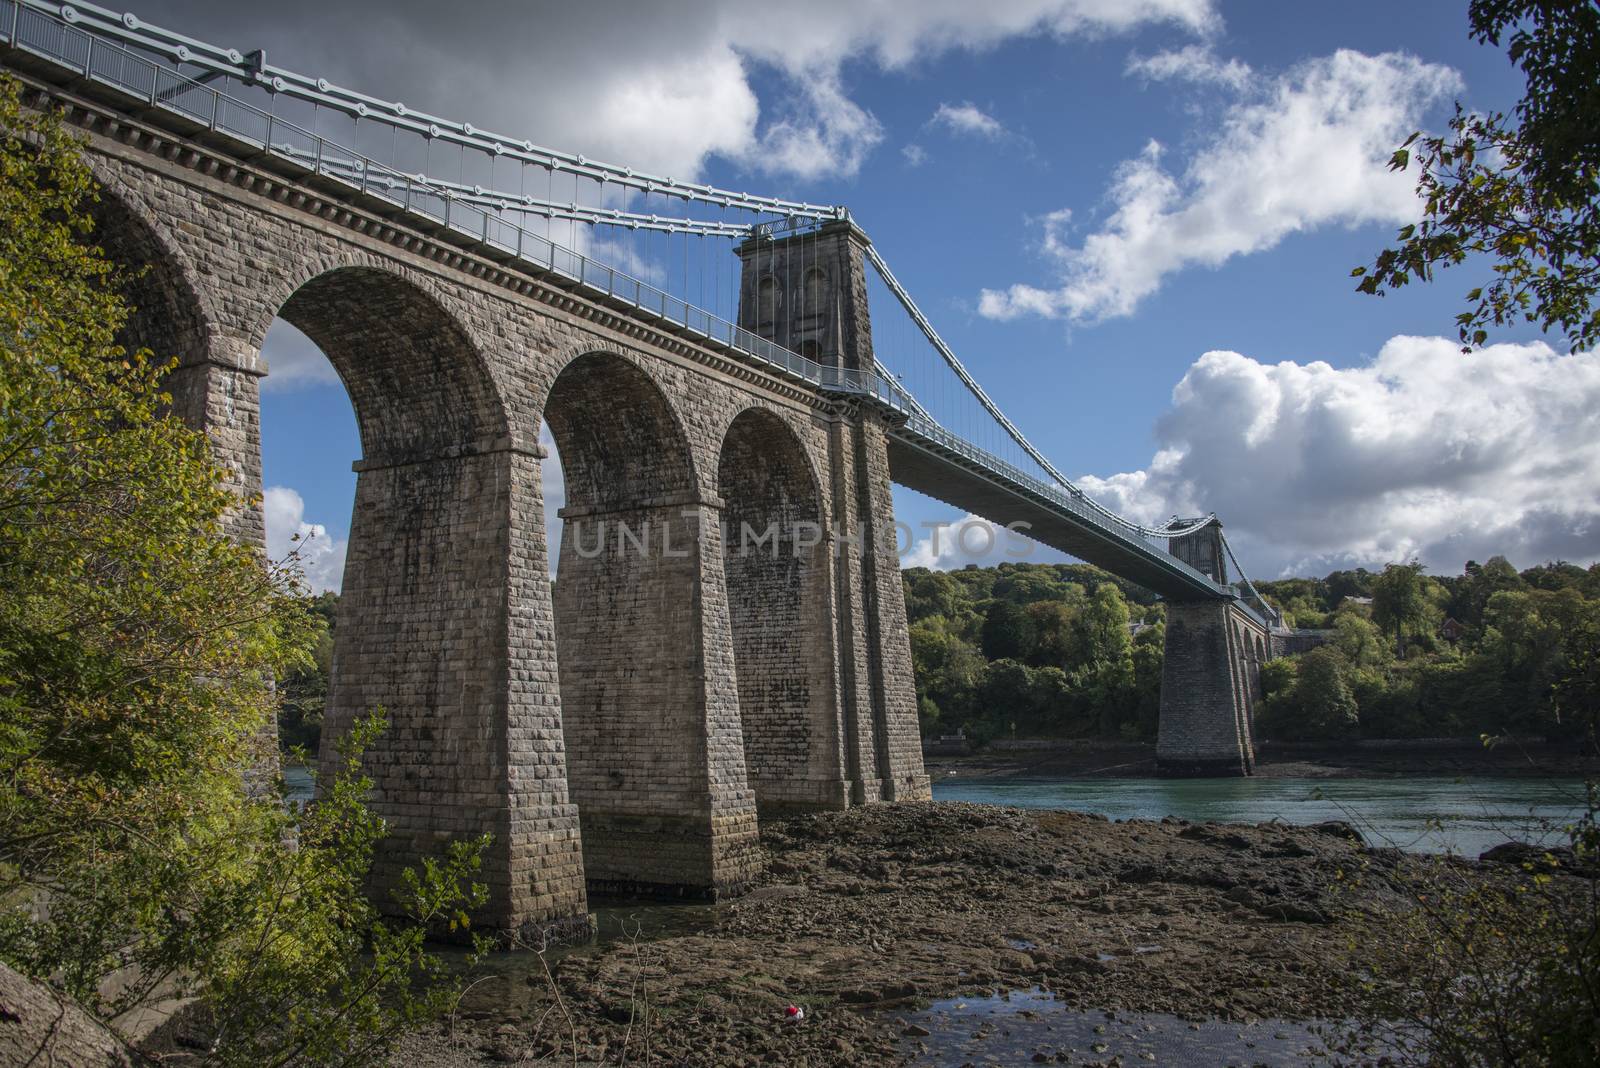 A view of the historic Menai suspension bridge spanning the Menai Straits, Gwynnedd, Wales, UK.